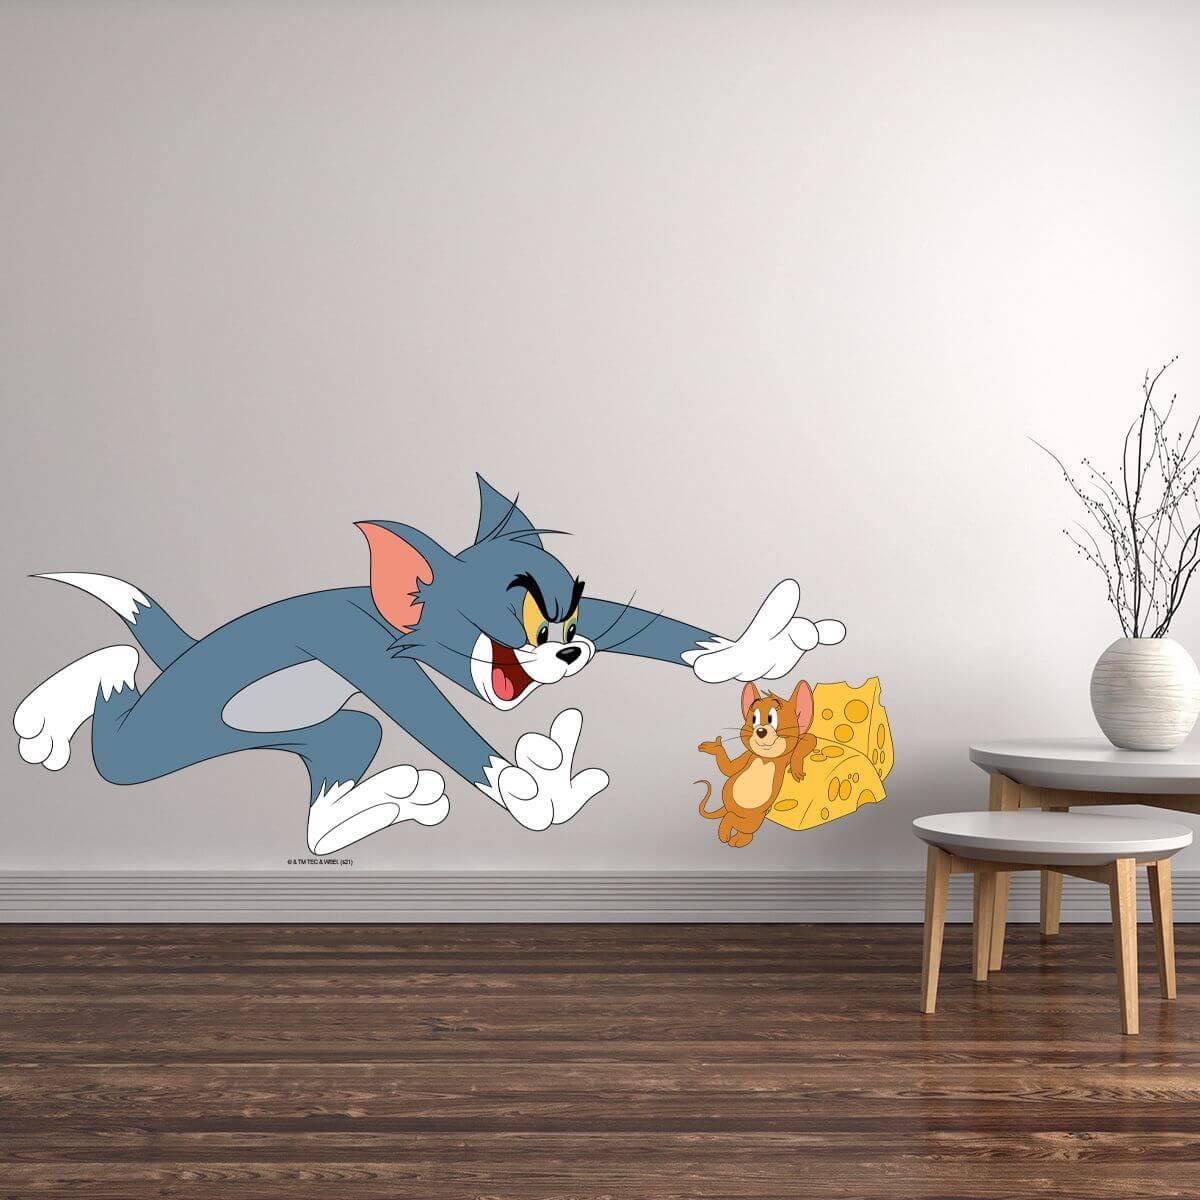 Kismet Decals Tom & Jerry: Racy Tom & Calm Jerry Licensed Wall Sticker - Easy DIY Home & Room Decor Cartoon Wall Art - Kismet Decals